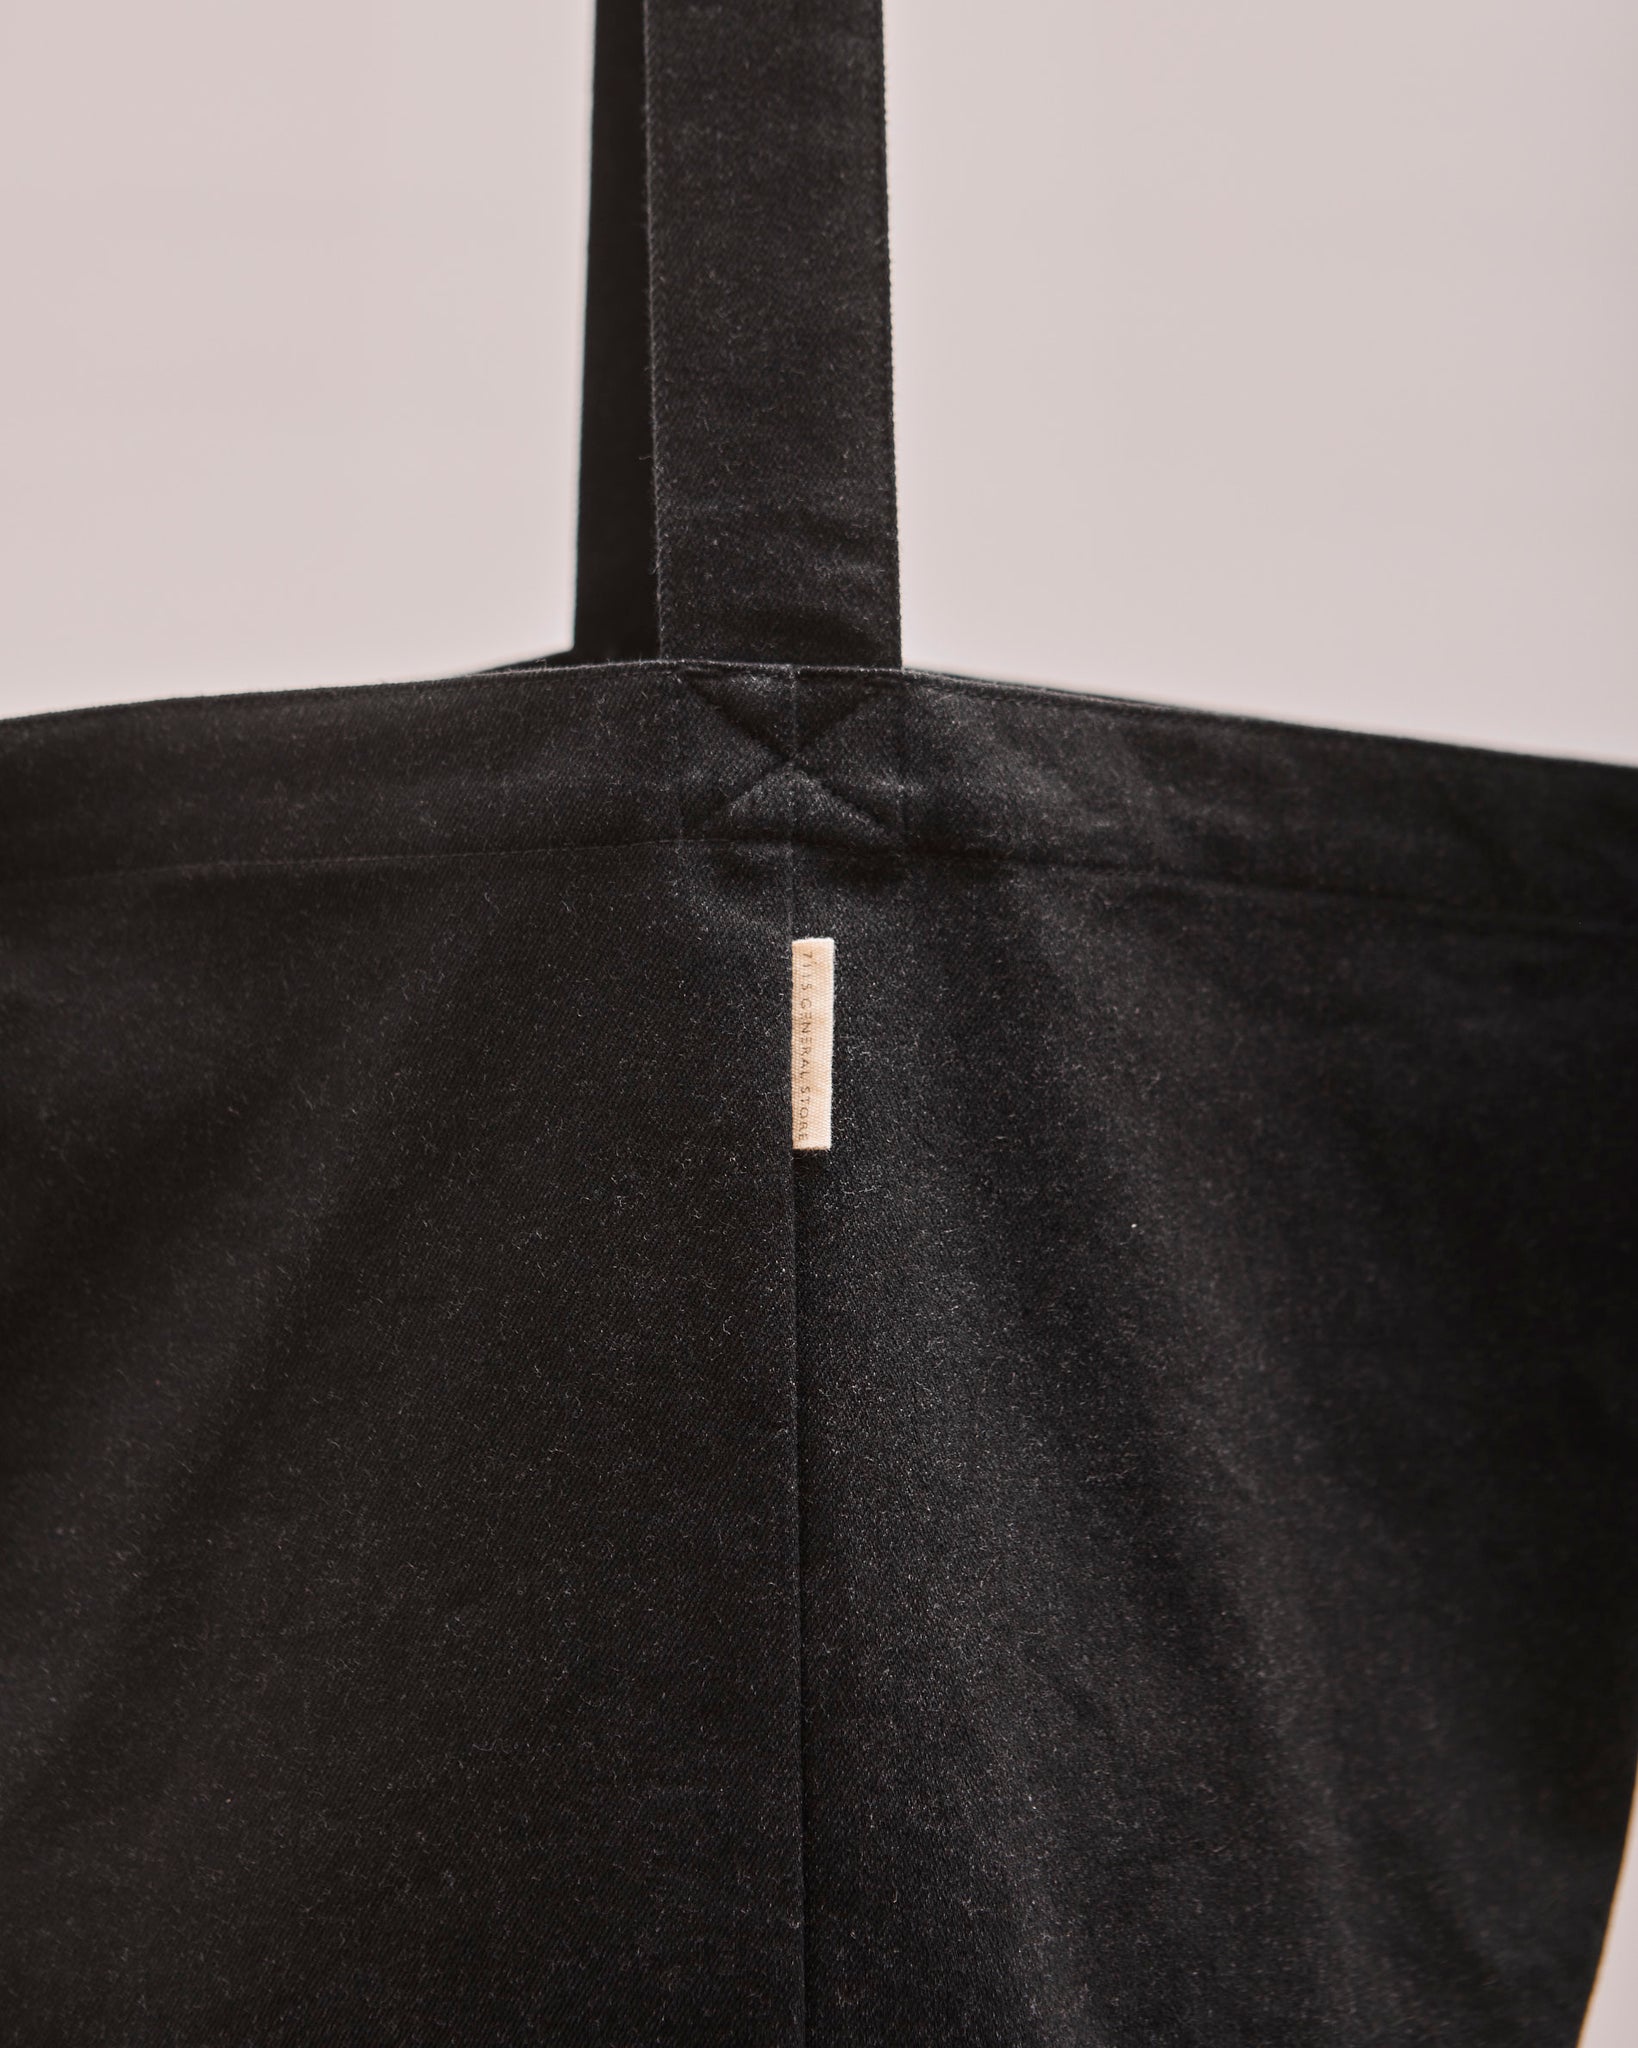 7115 Carry-All Commuter Bag, Navy Black detail